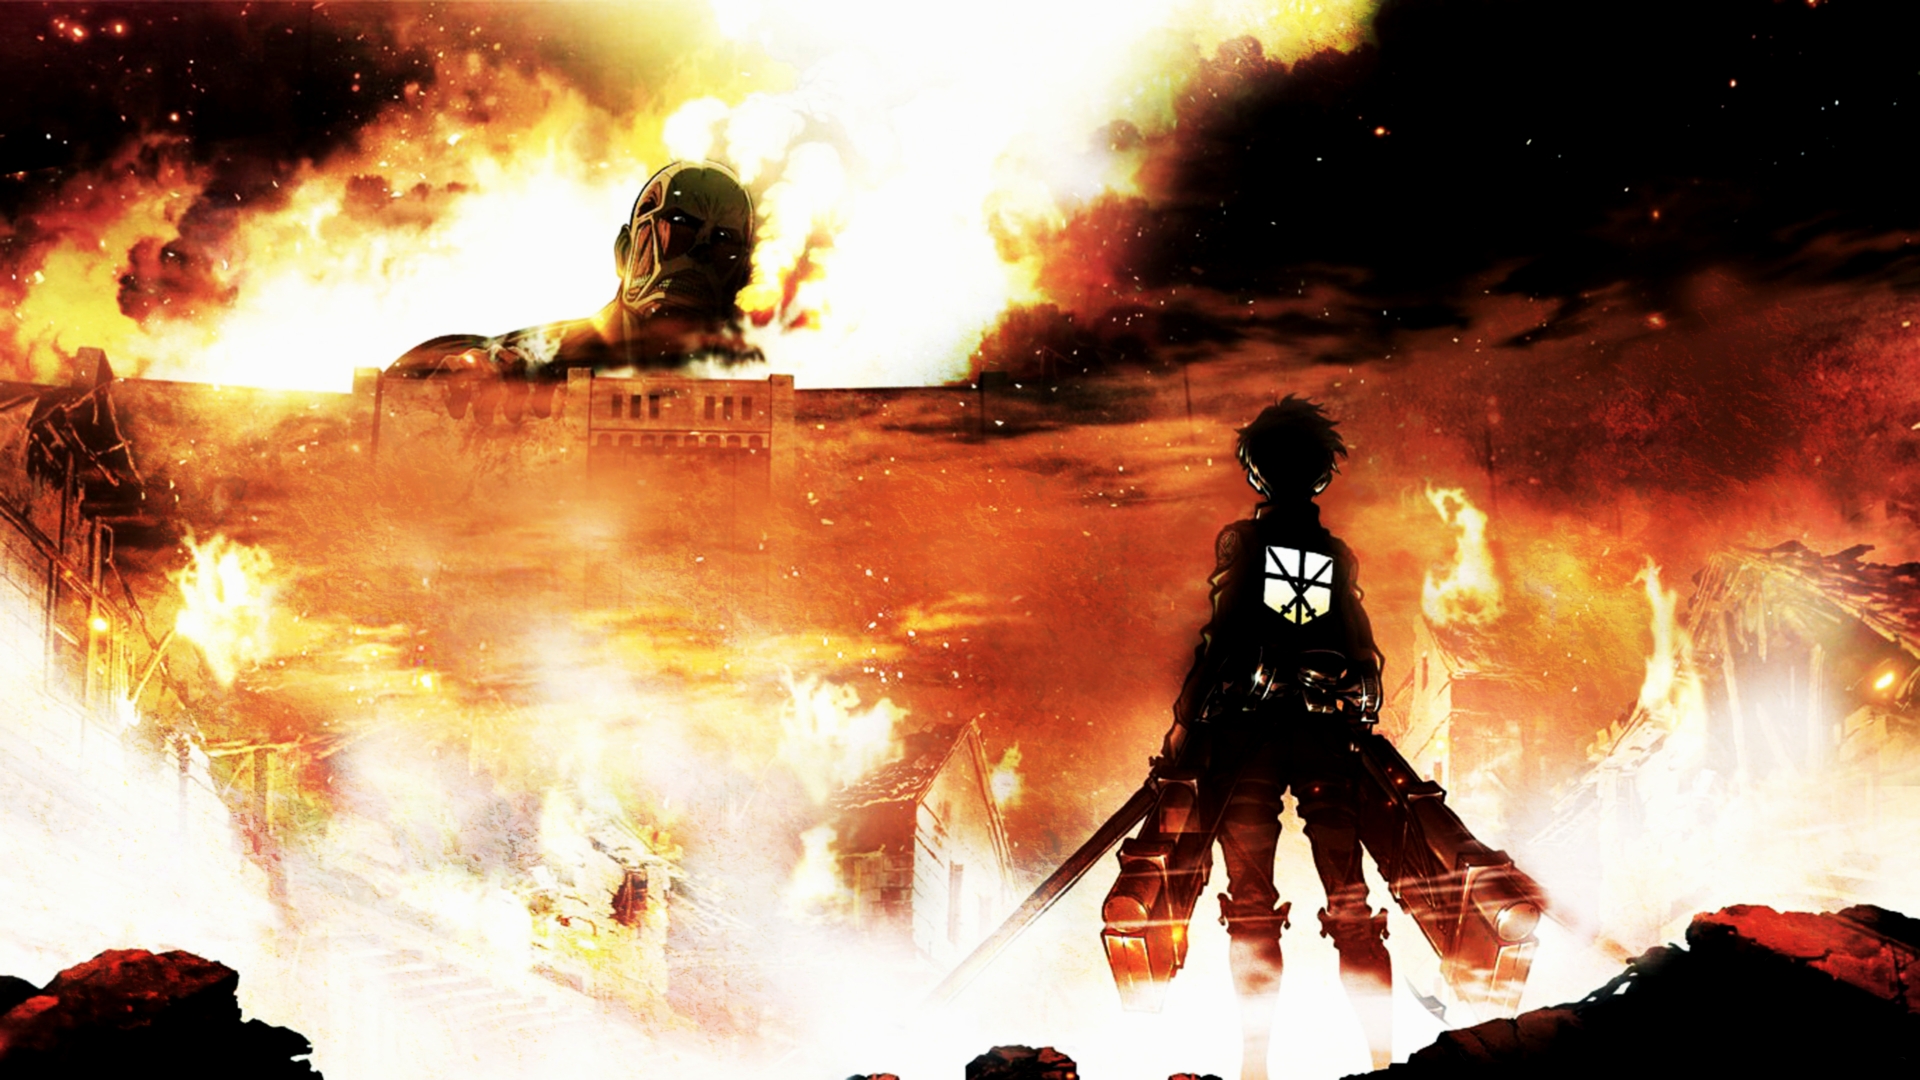 Attack on Titan - Original Soundtrack Mix (Best of Shingeki no